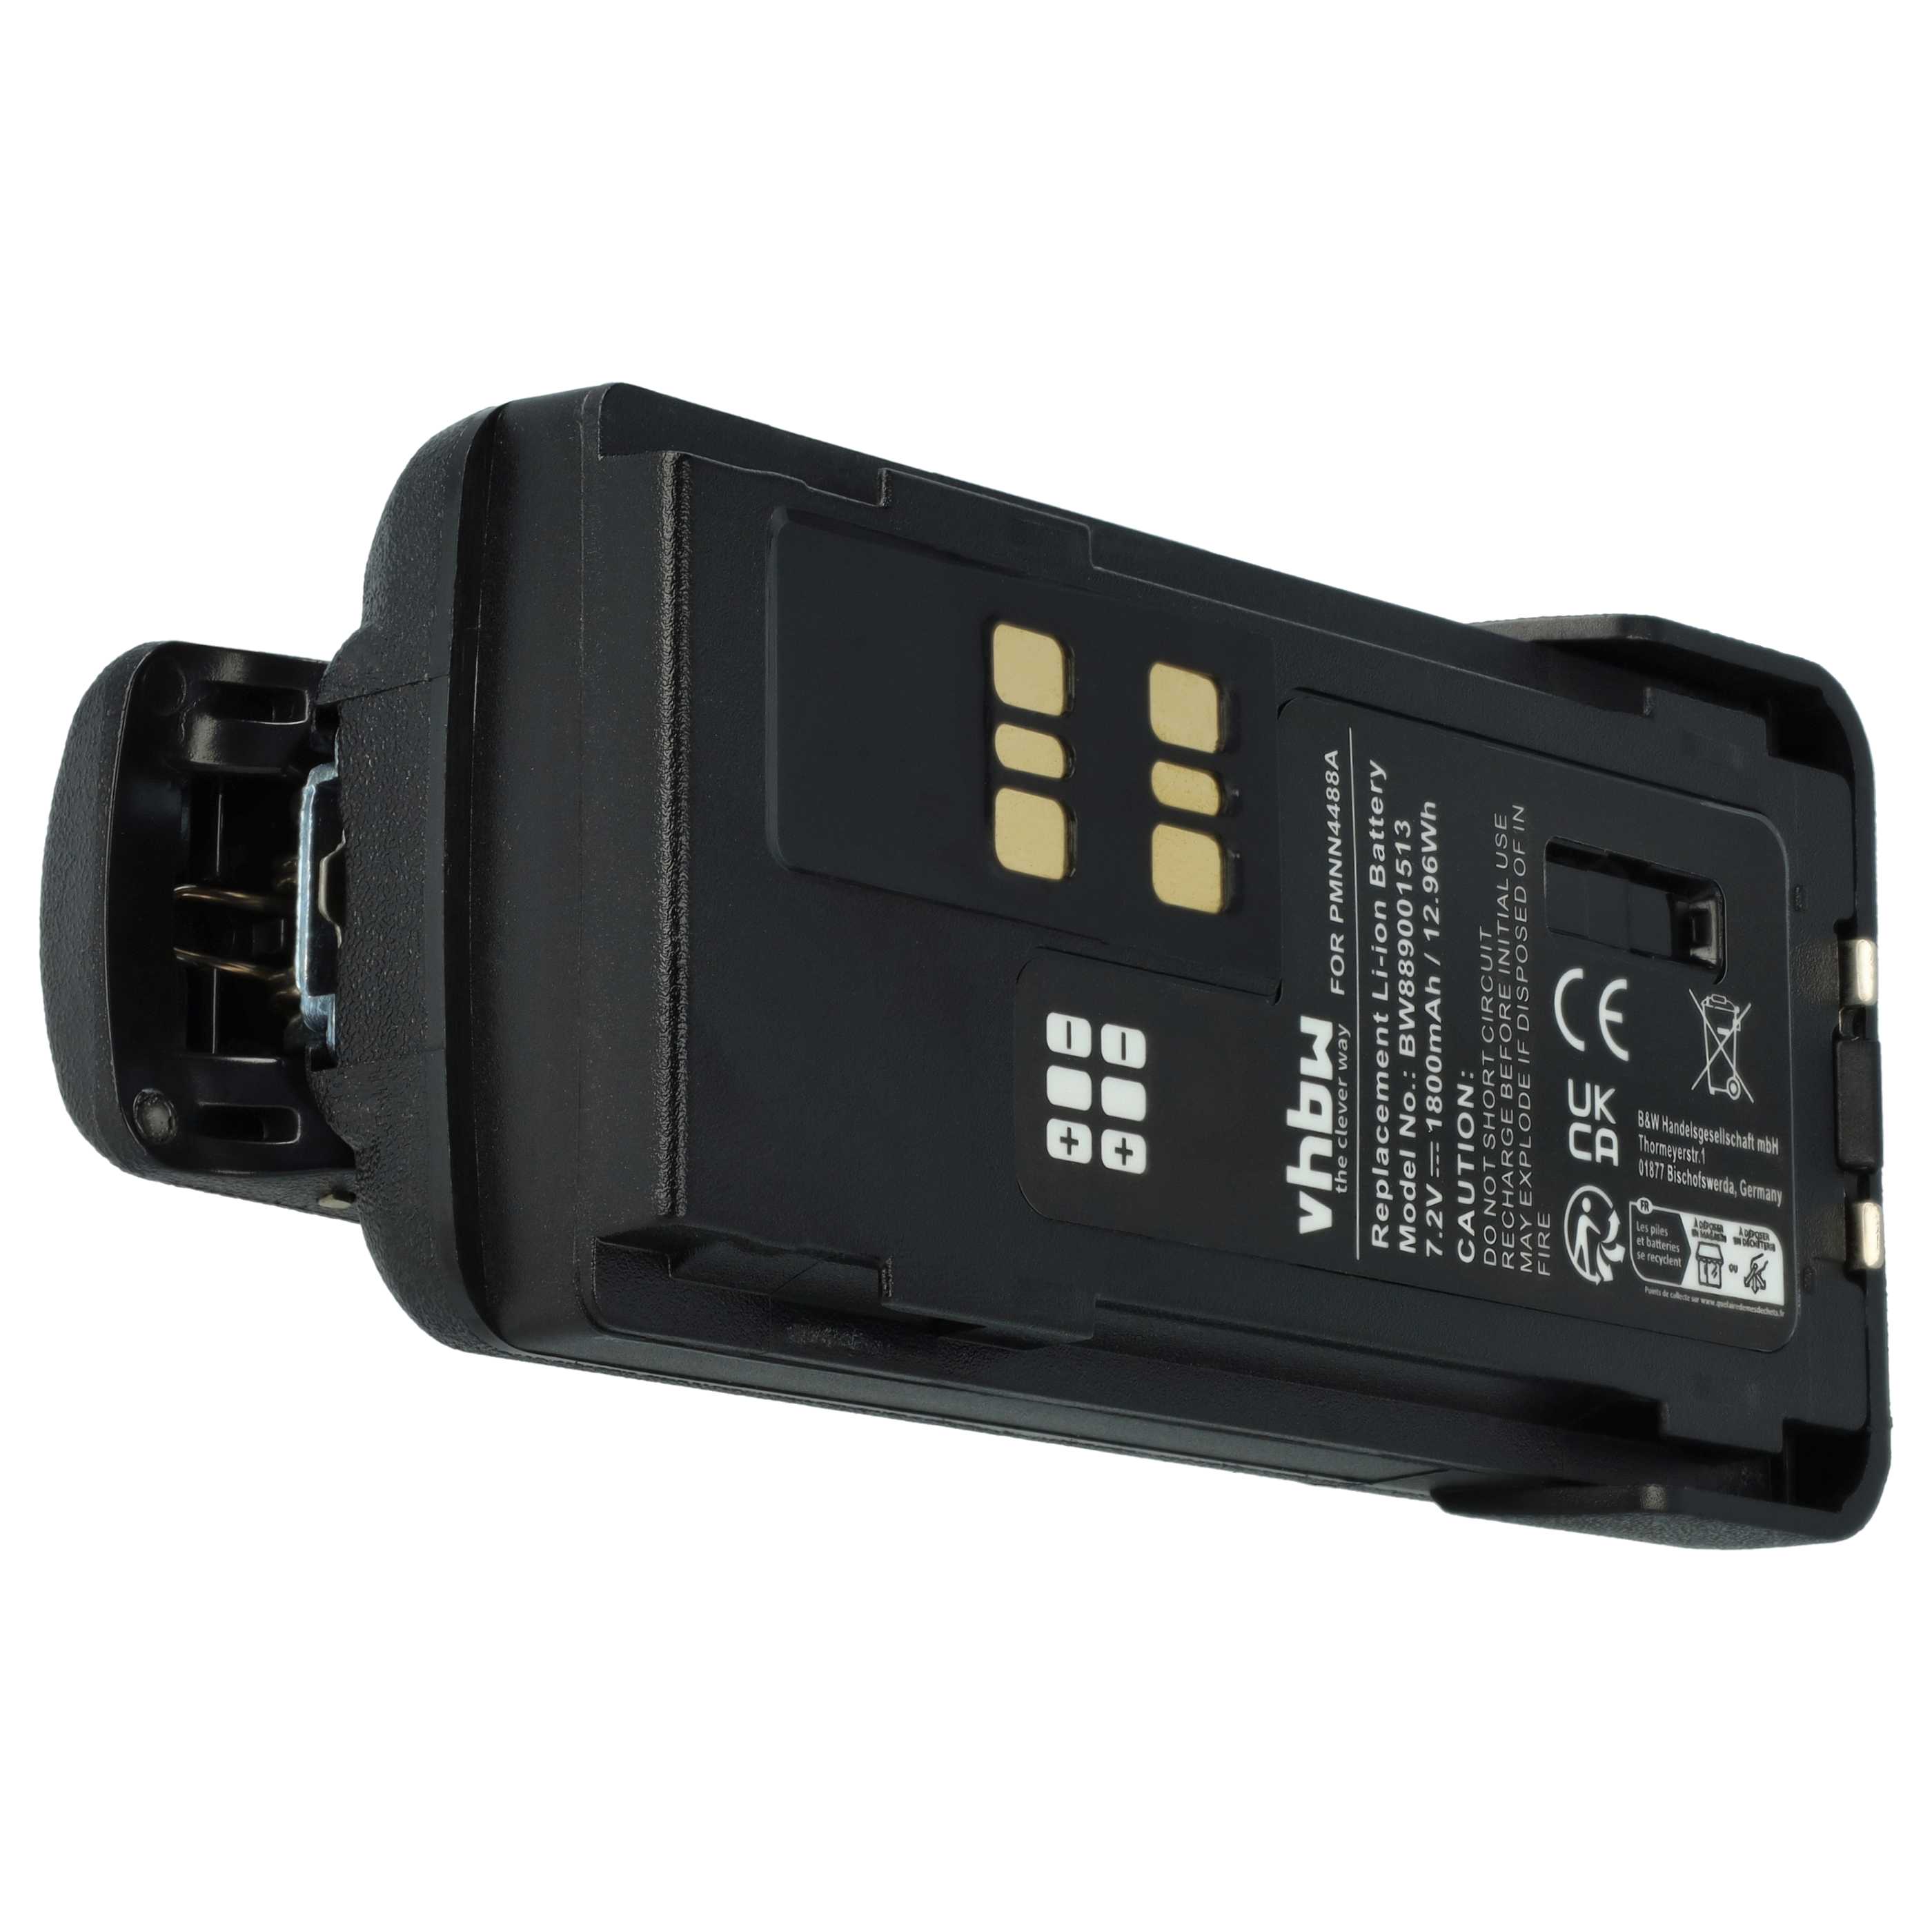 Akumulator do radiotelefonu zamiennik Motorola PMNN4415, PMNN441 - 1800 mAh 7,4 V Li-Ion + klips na pasek